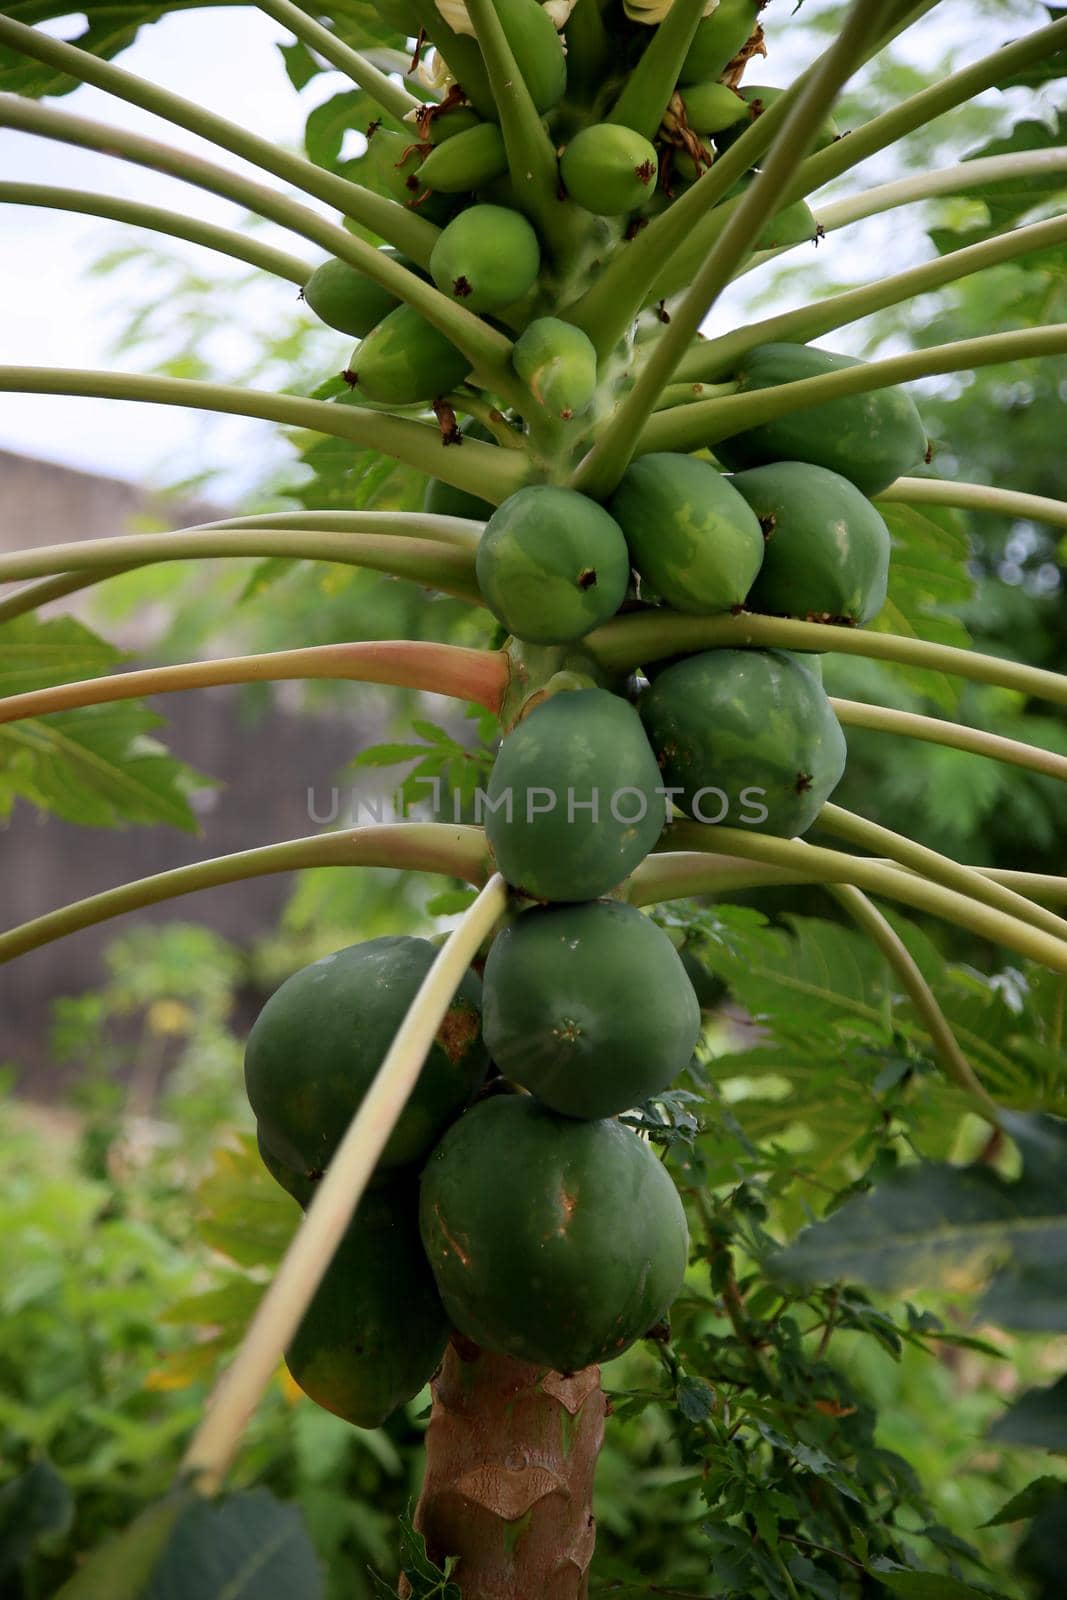 salvador, bahia / barazil - february 8, 2020: papayas are seen in a plantation in the city of Salvador.